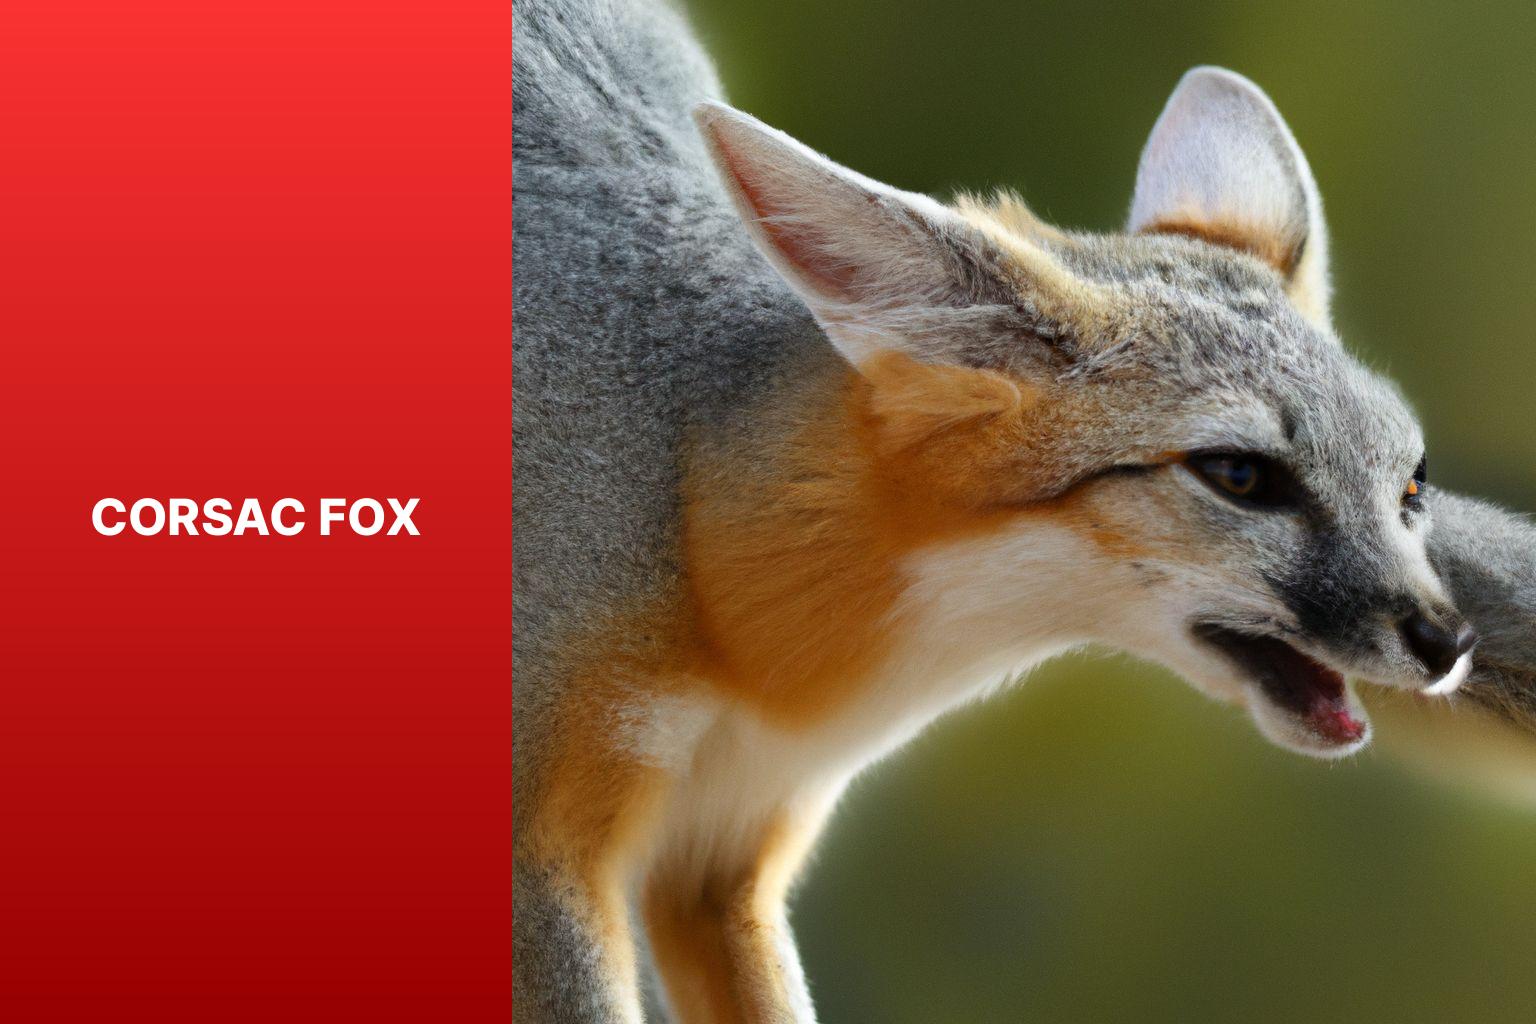 Corsac Fox - Corsac Fox vs Swift Fox 